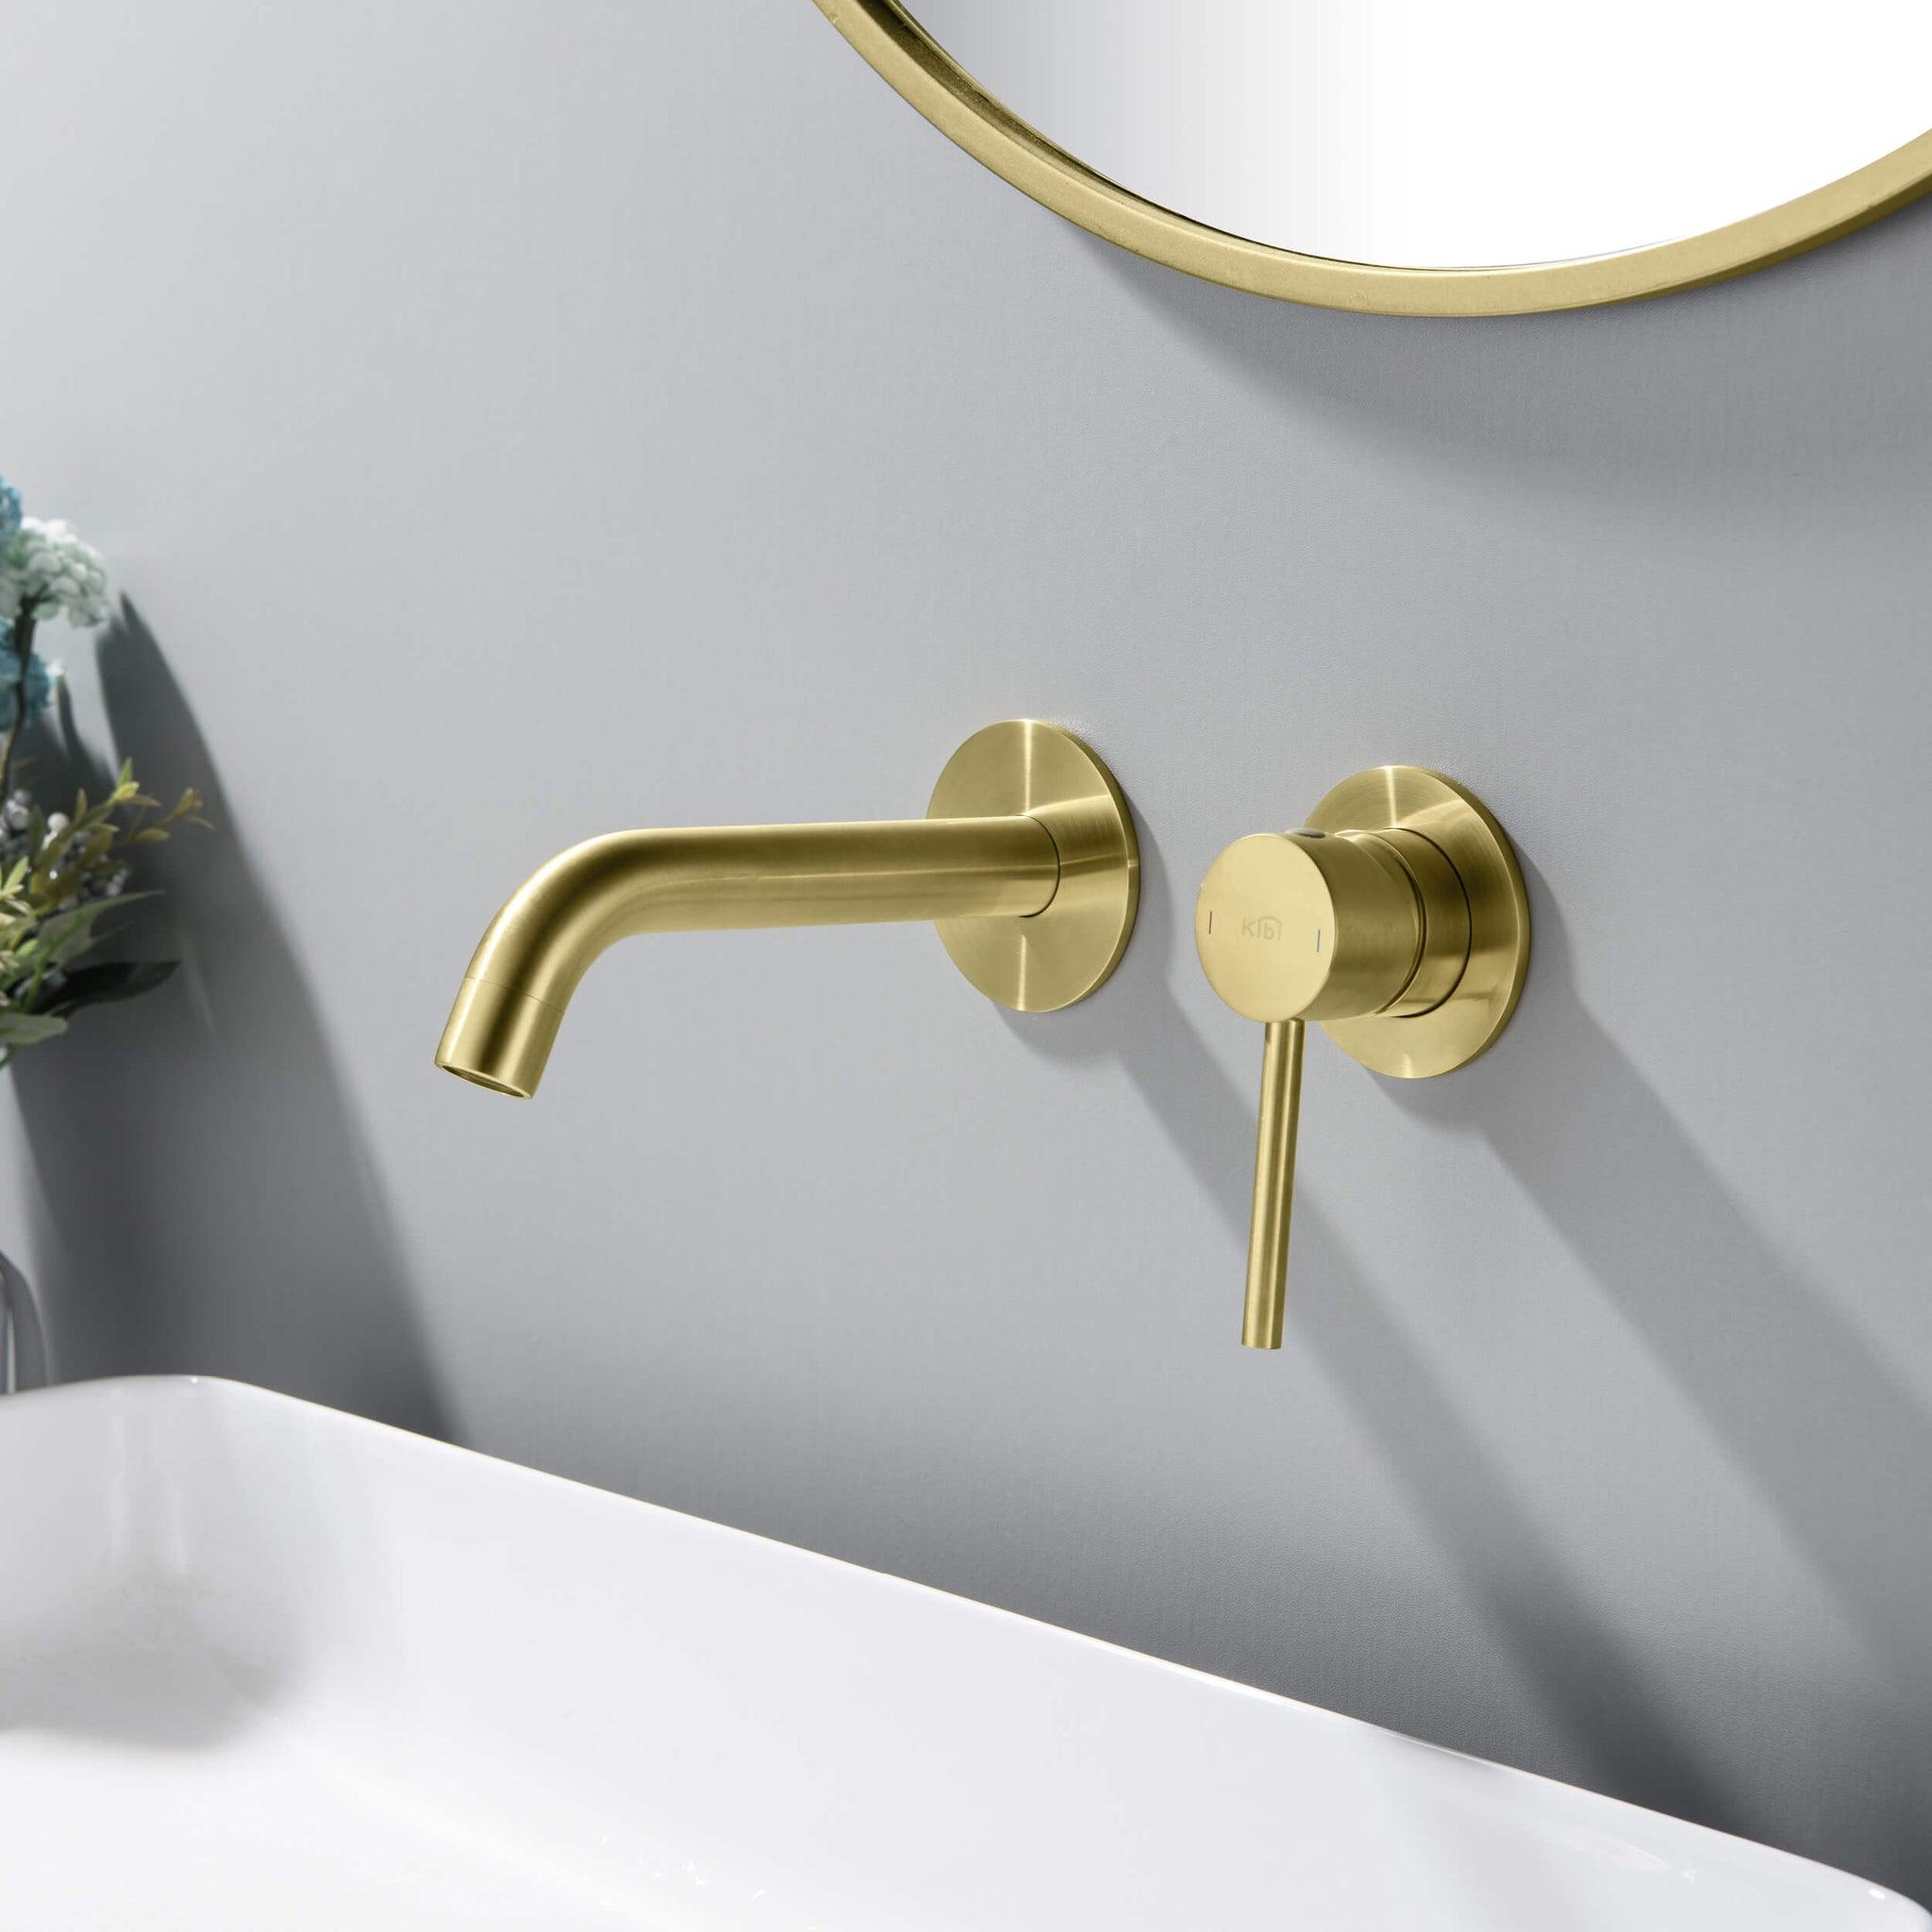 KIBI, KIBI Circular Wall Mounted Single Handle Brushed Gold Solid Brass Bathroom Sink Faucet